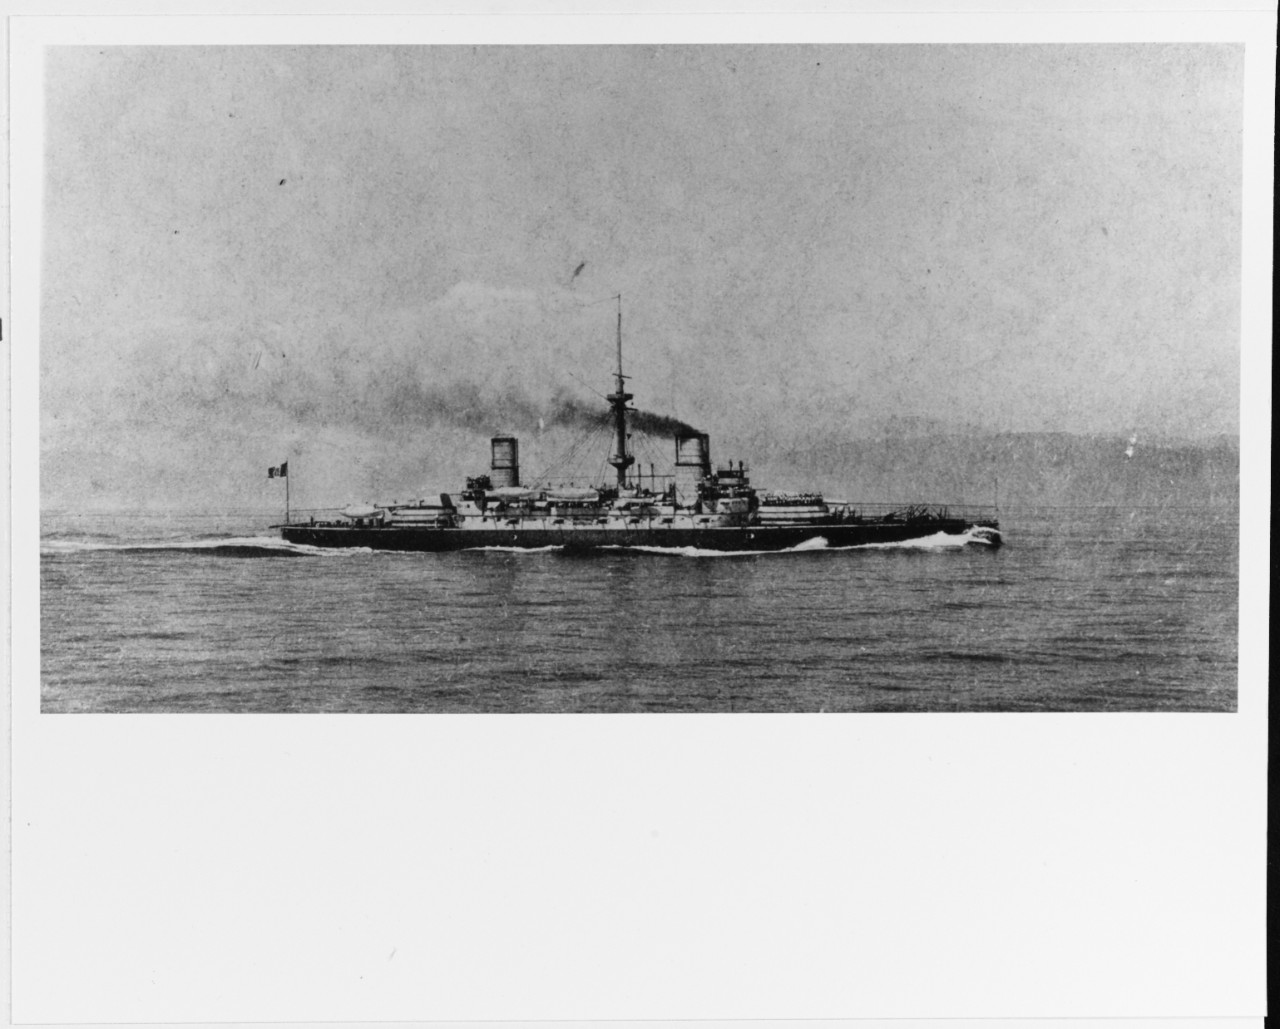 SARDEGNA (Italian battleship, 1890-1923)